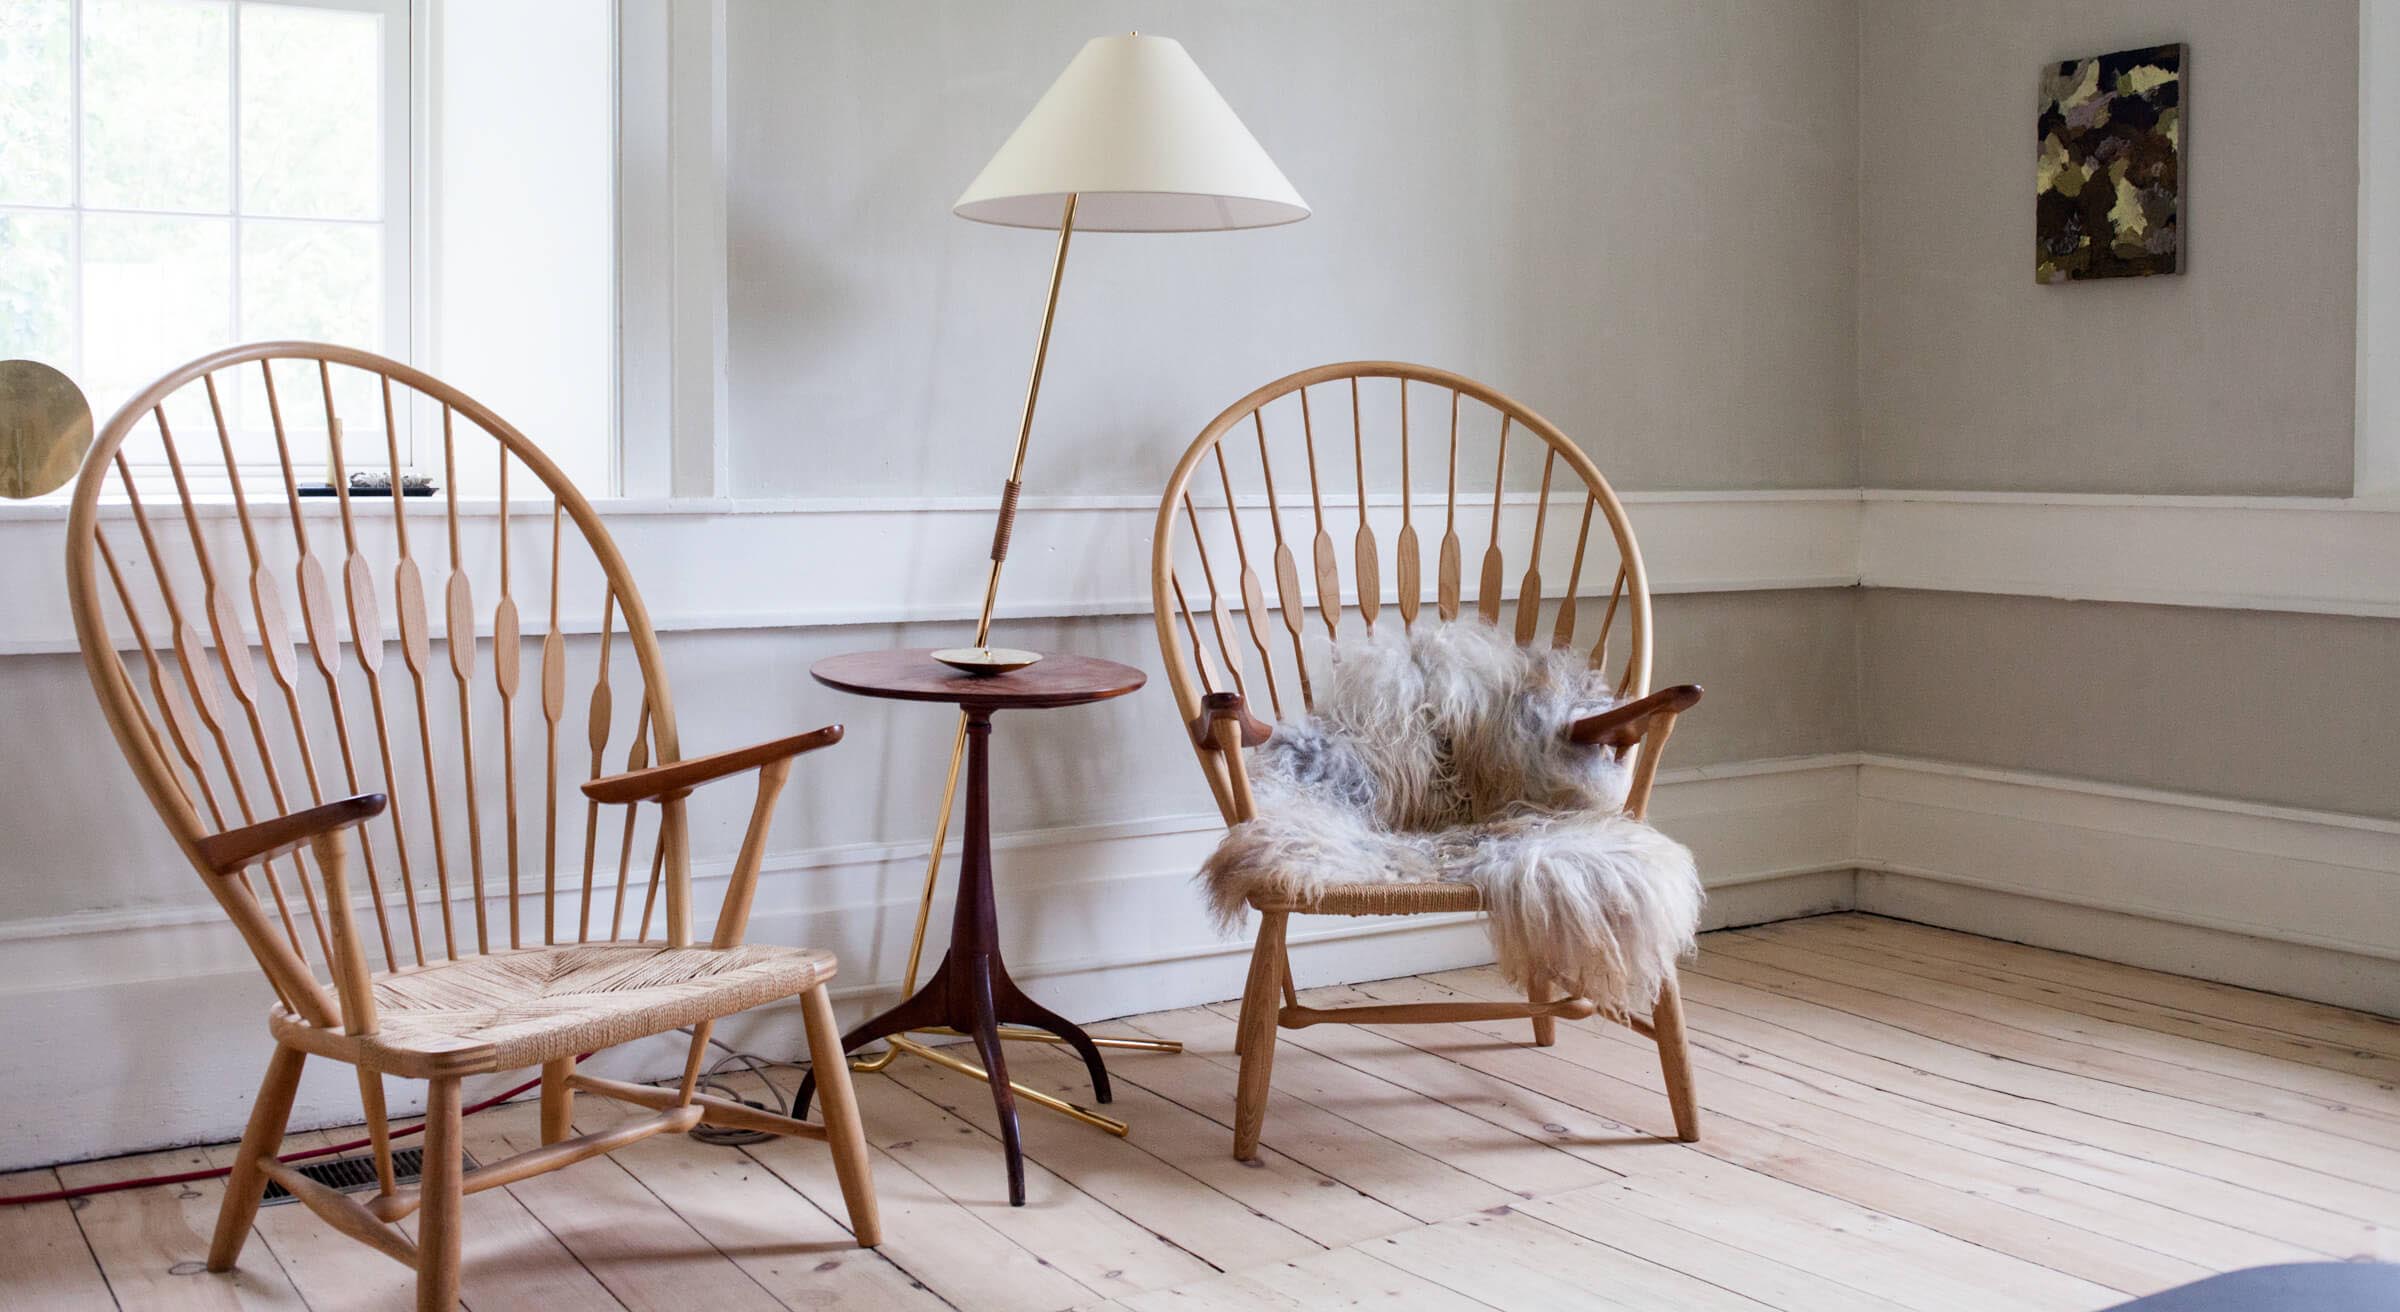 Iconic Mid-Century Modern Chair Designs